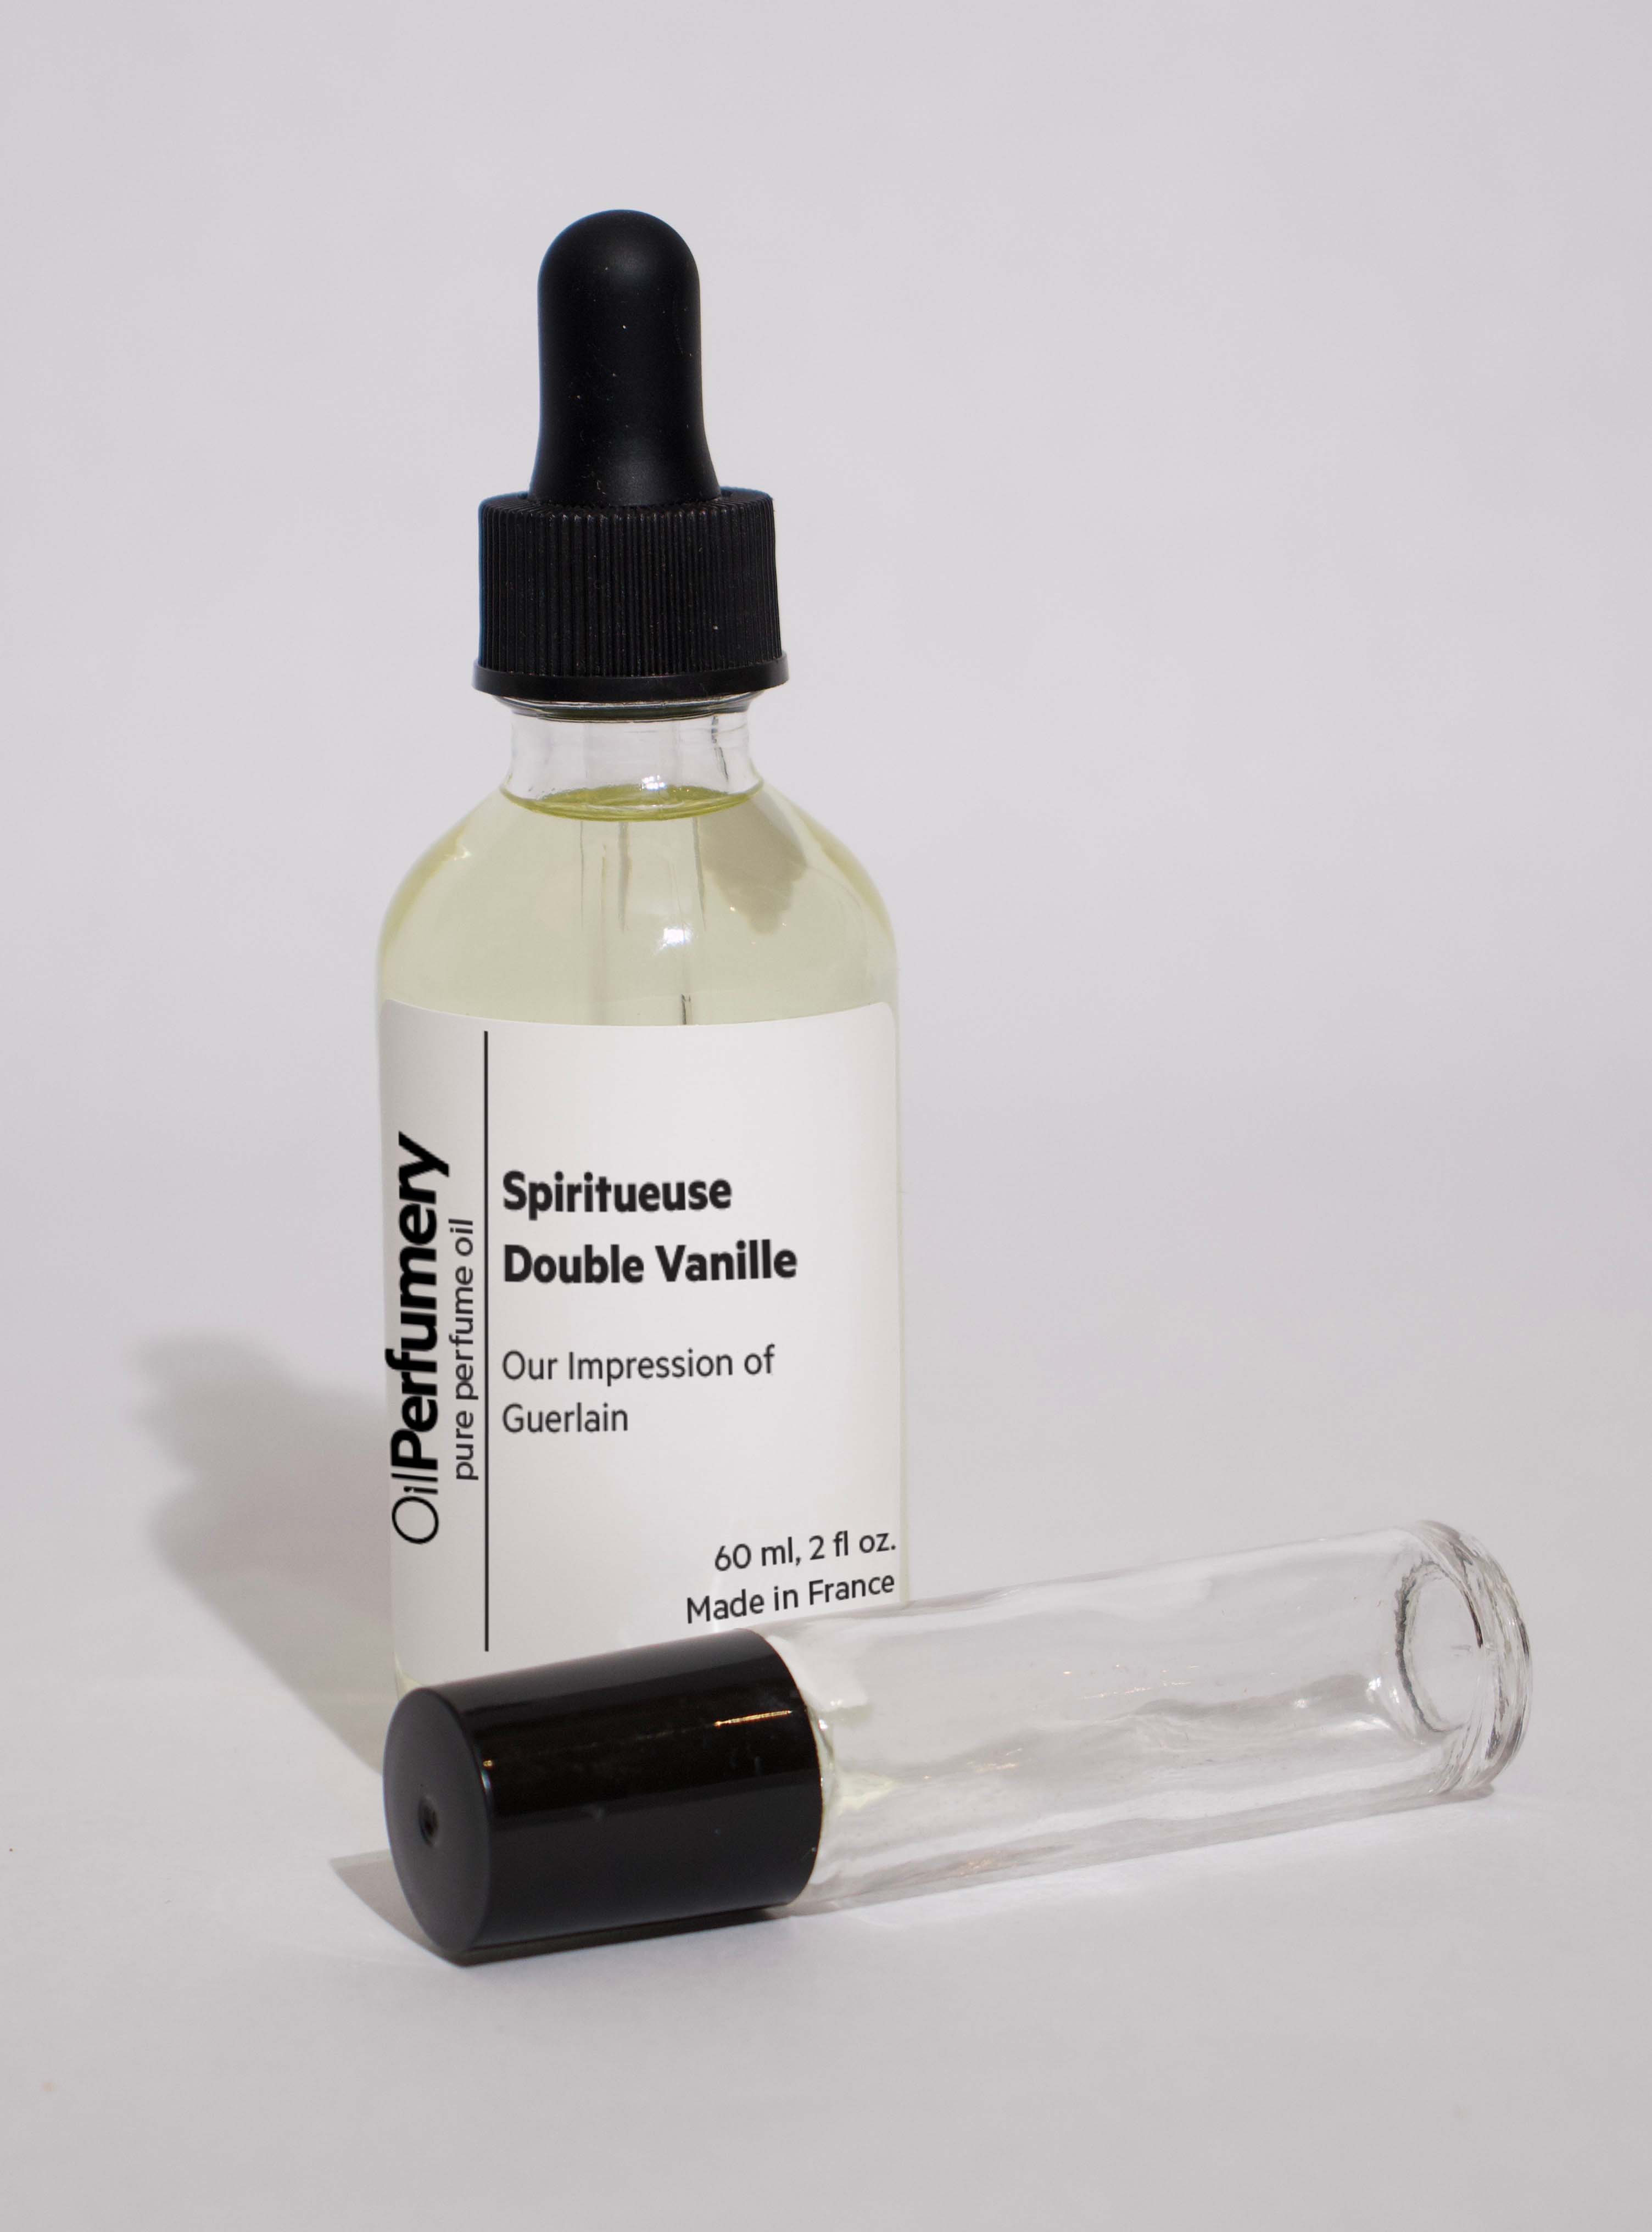 Oil Perfumery Impression of Guerlain - Spiritueuse Double Vanille